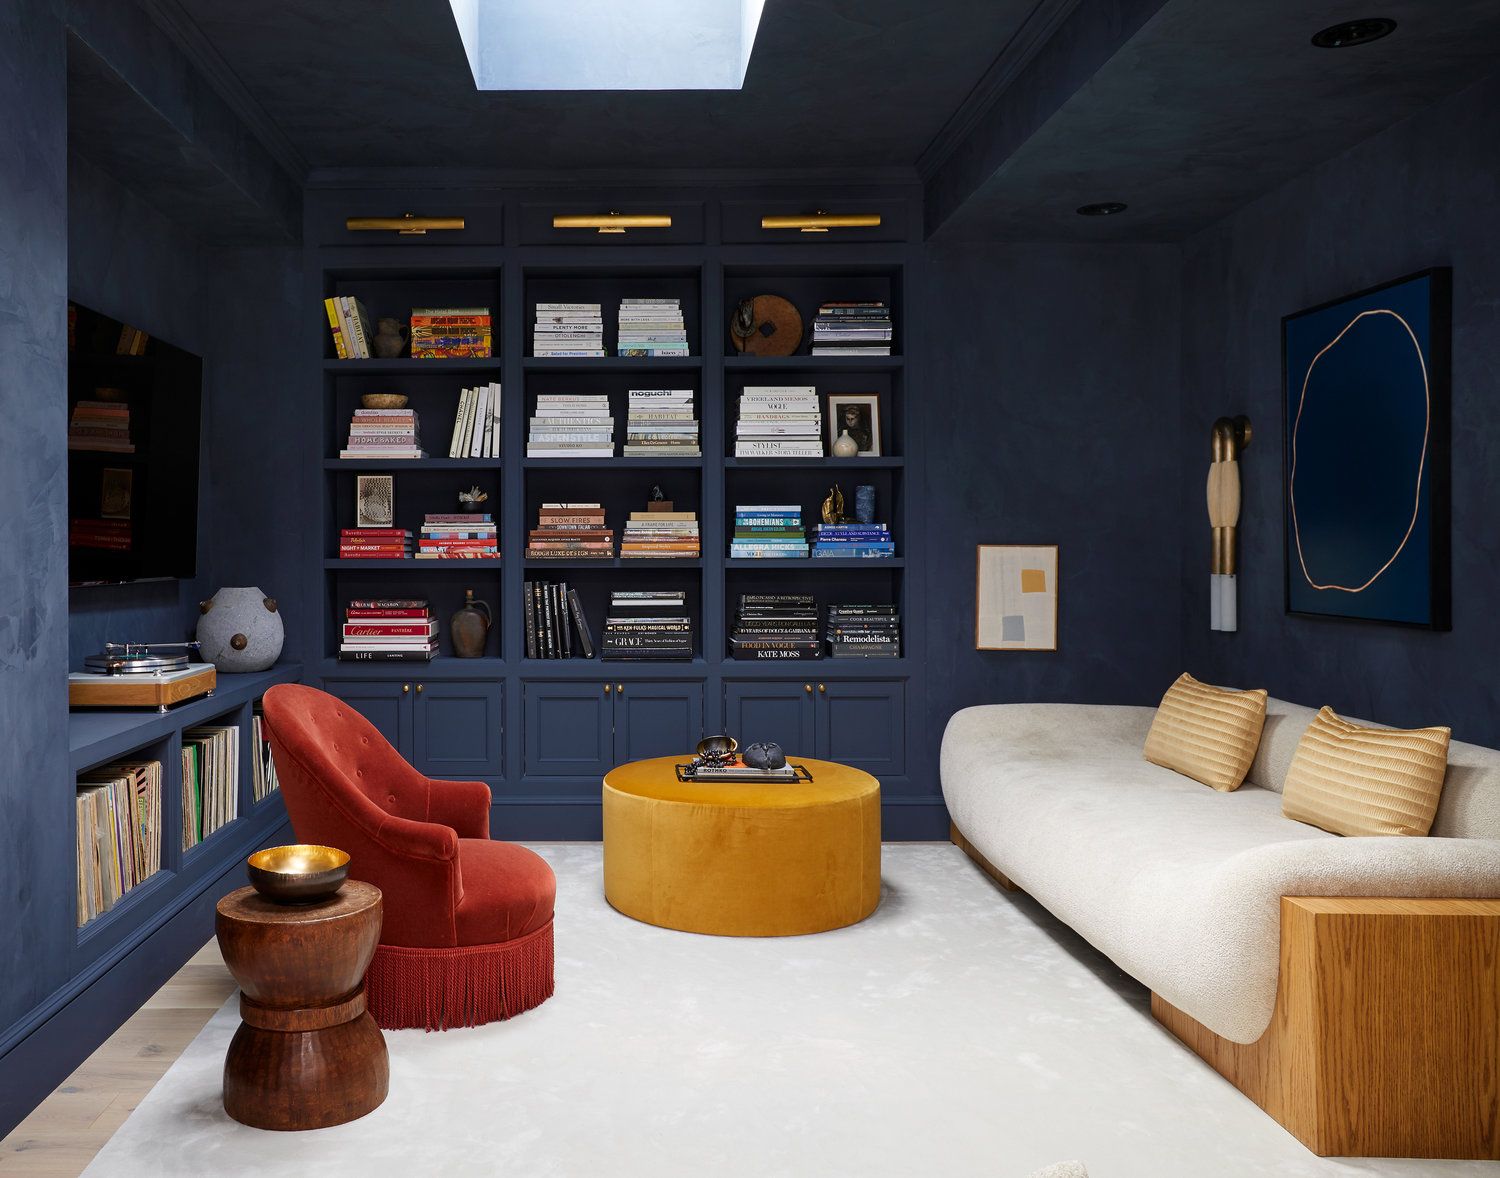 20 Easy Media Room Ideas - Stylish Home Theater Inspiration